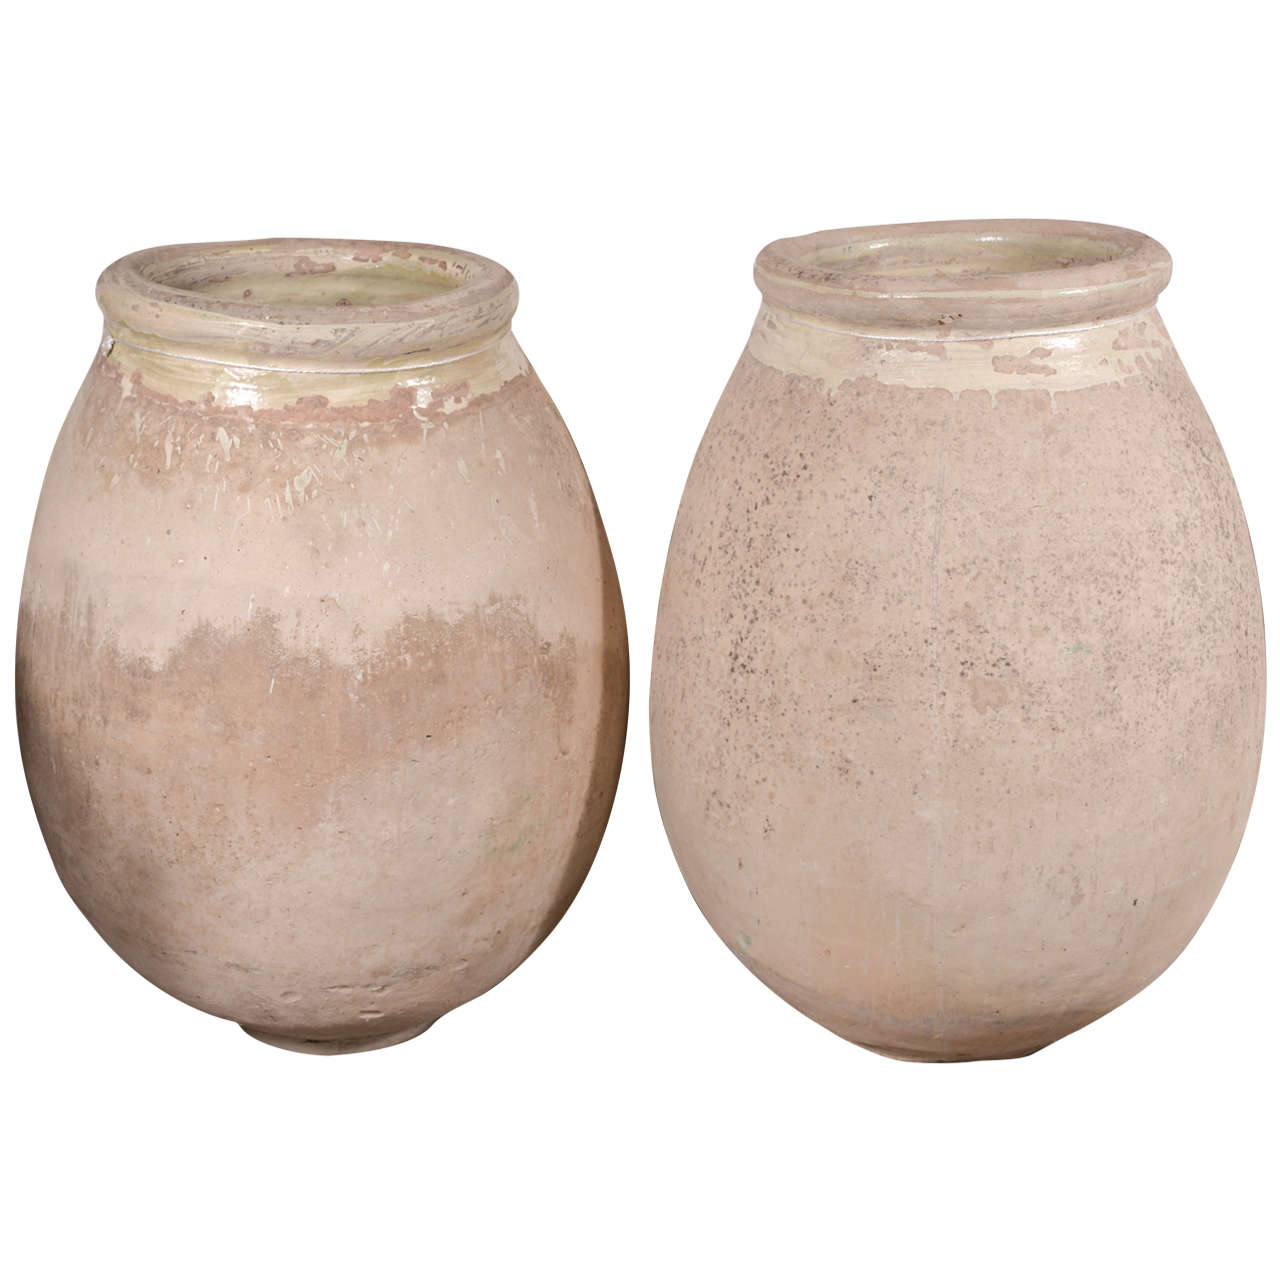 Pair of 19th Century French Biot Jars